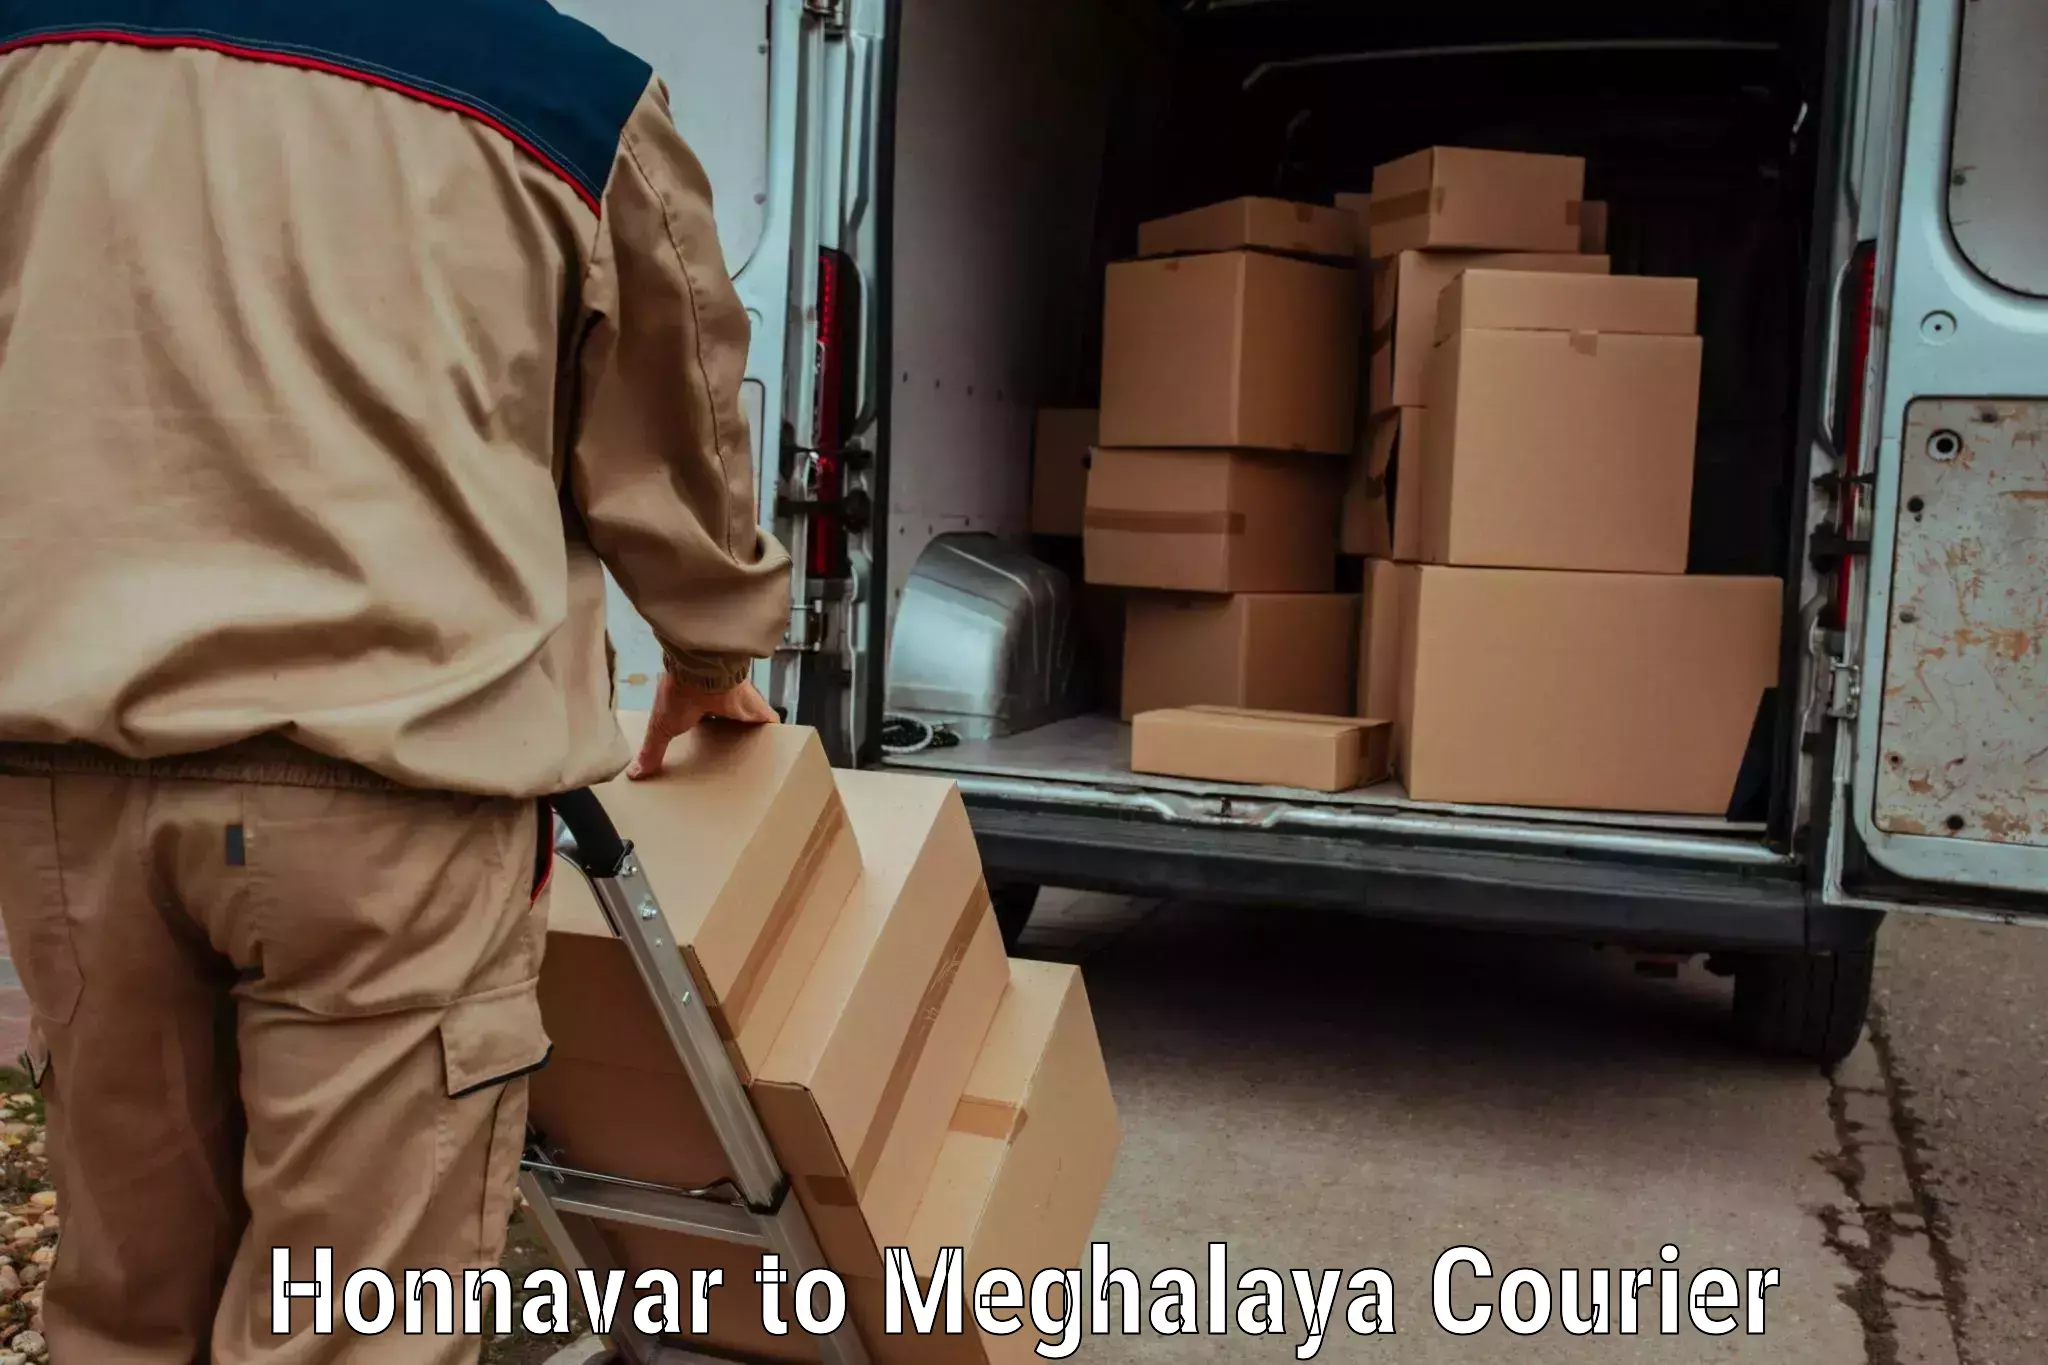 Expedited parcel delivery Honnavar to Shillong